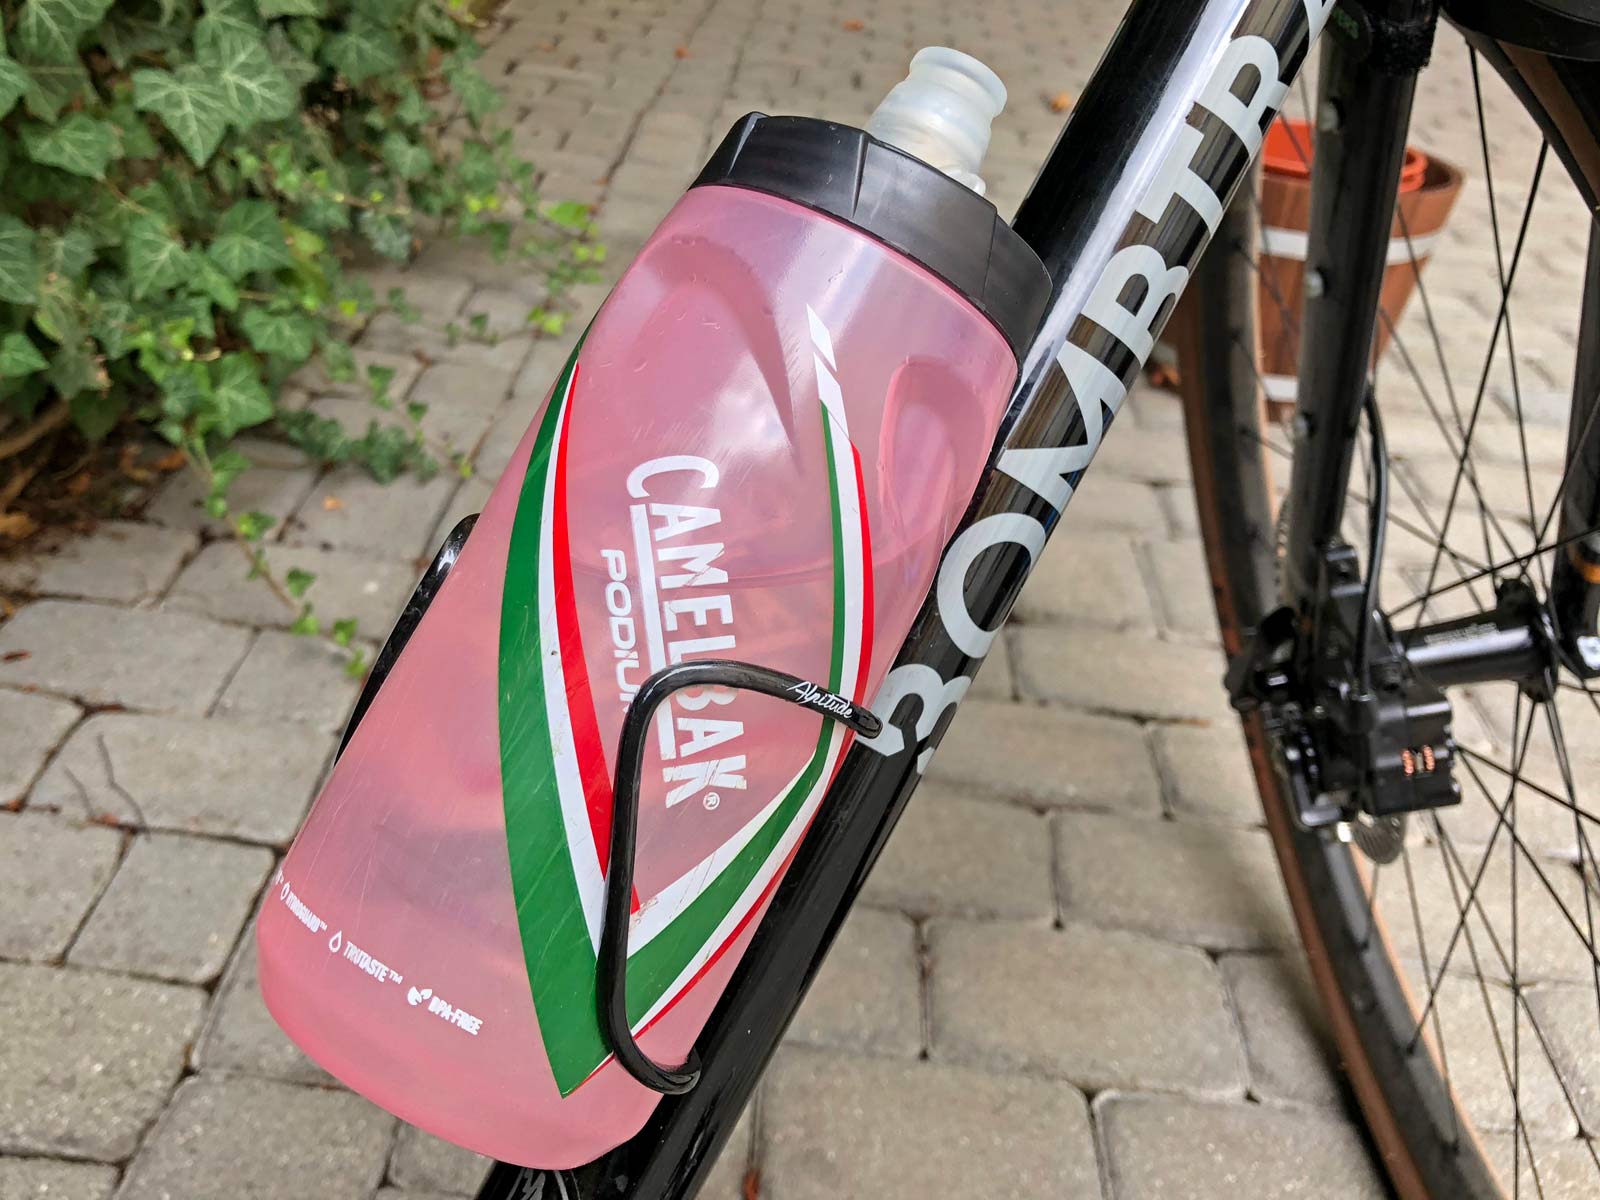 Alpitude Superleggero ultralight minimalist road bike carbon water bottle cages, 9g actual weight